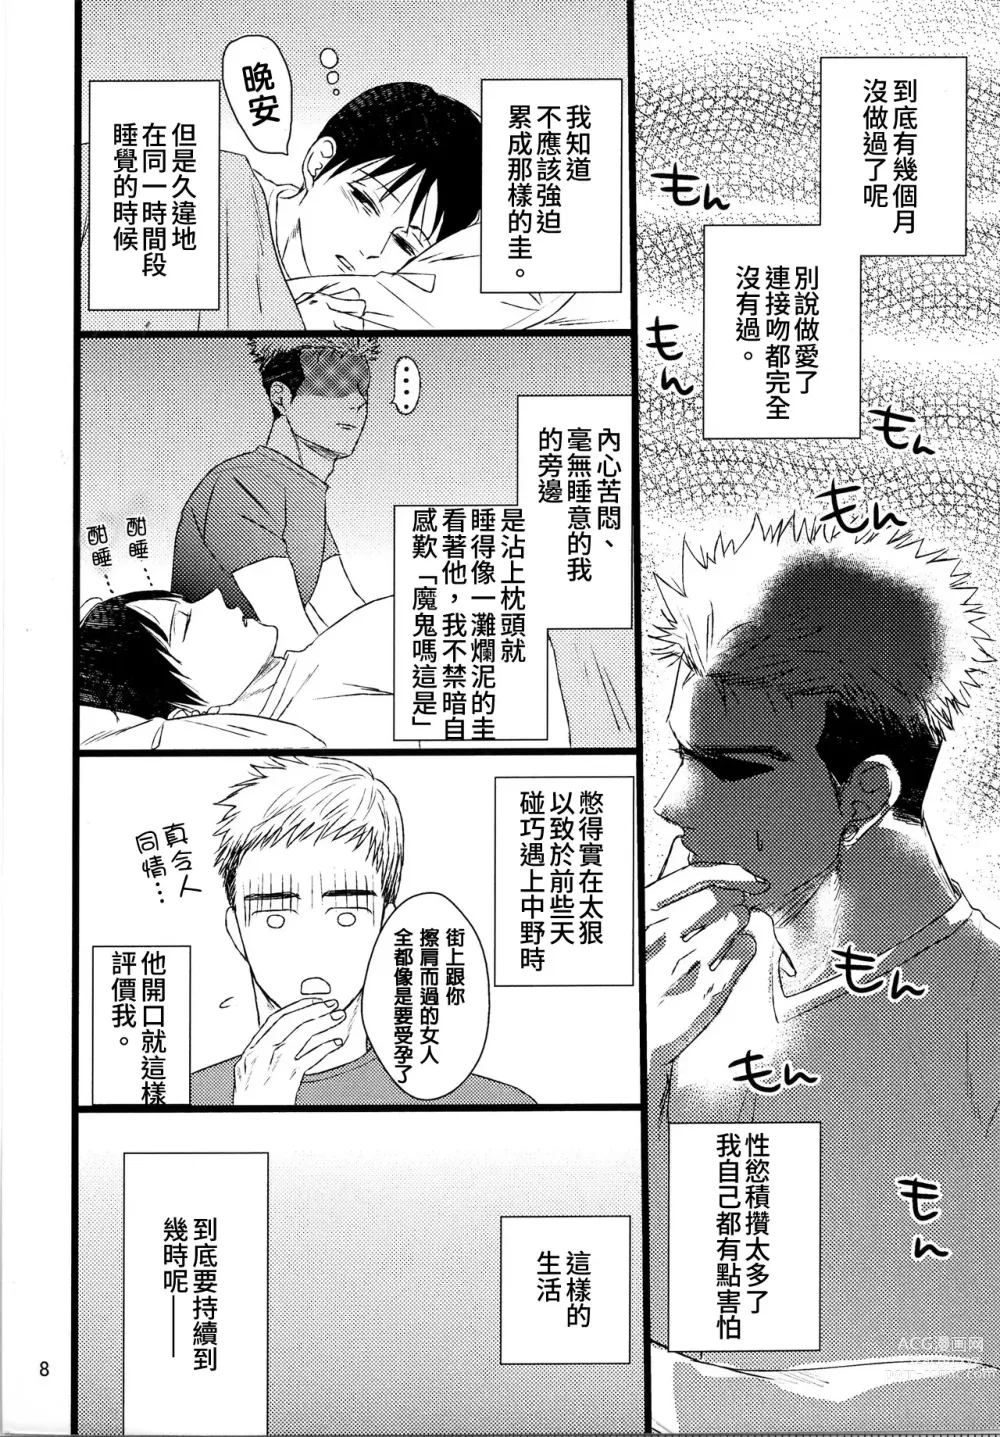 Page 6 of doujinshi Ajin 亜人